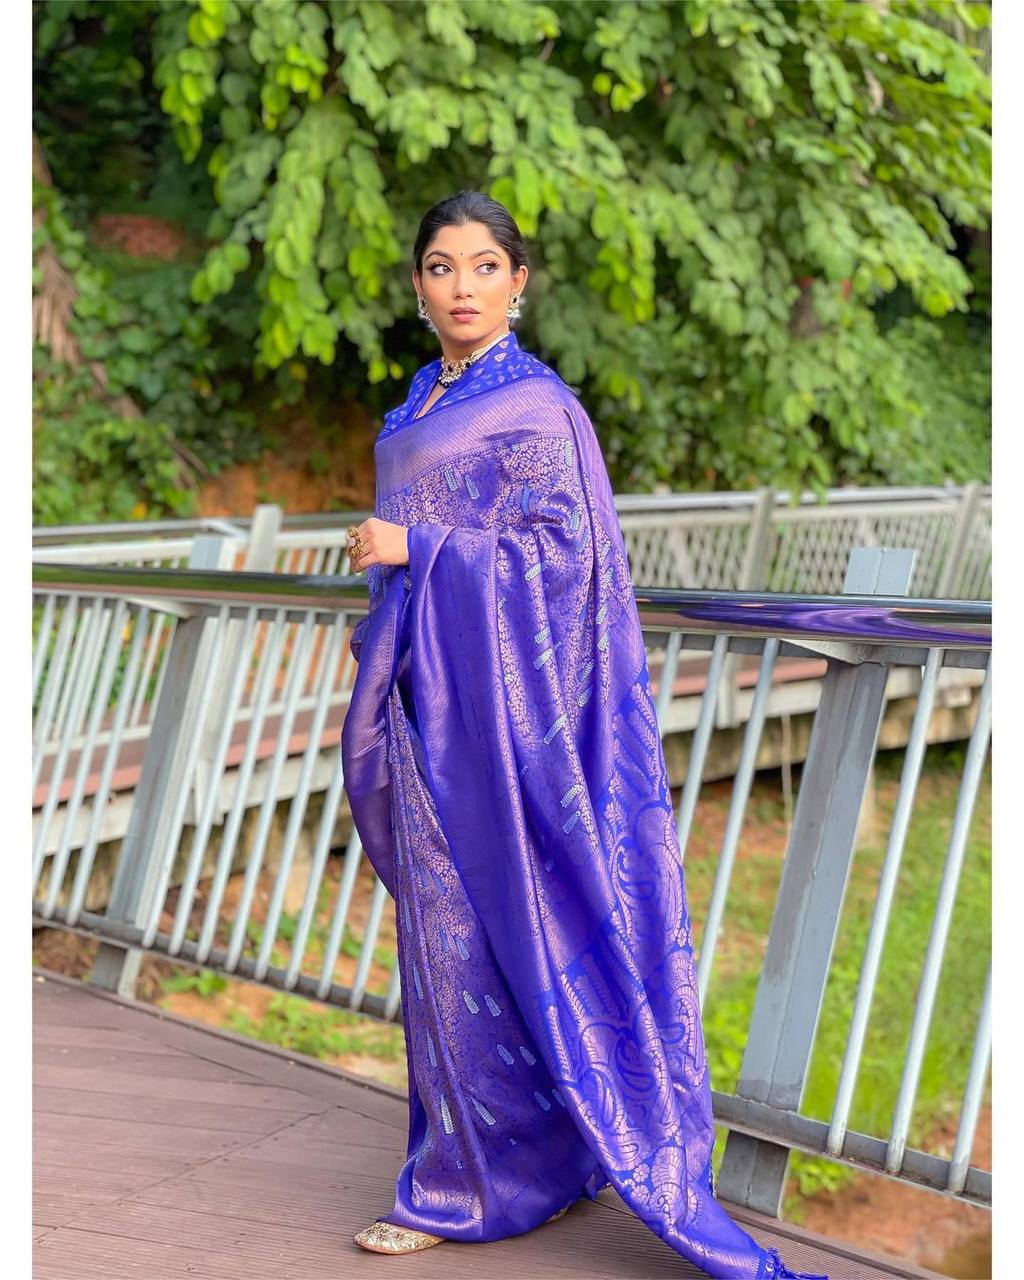 Stunning Violet Saree With White Mina Touch & Heavy Brocade Blouse Banarasi Beautiful Zari Work In Form Of Traditional Motifs Soft Silk Saree